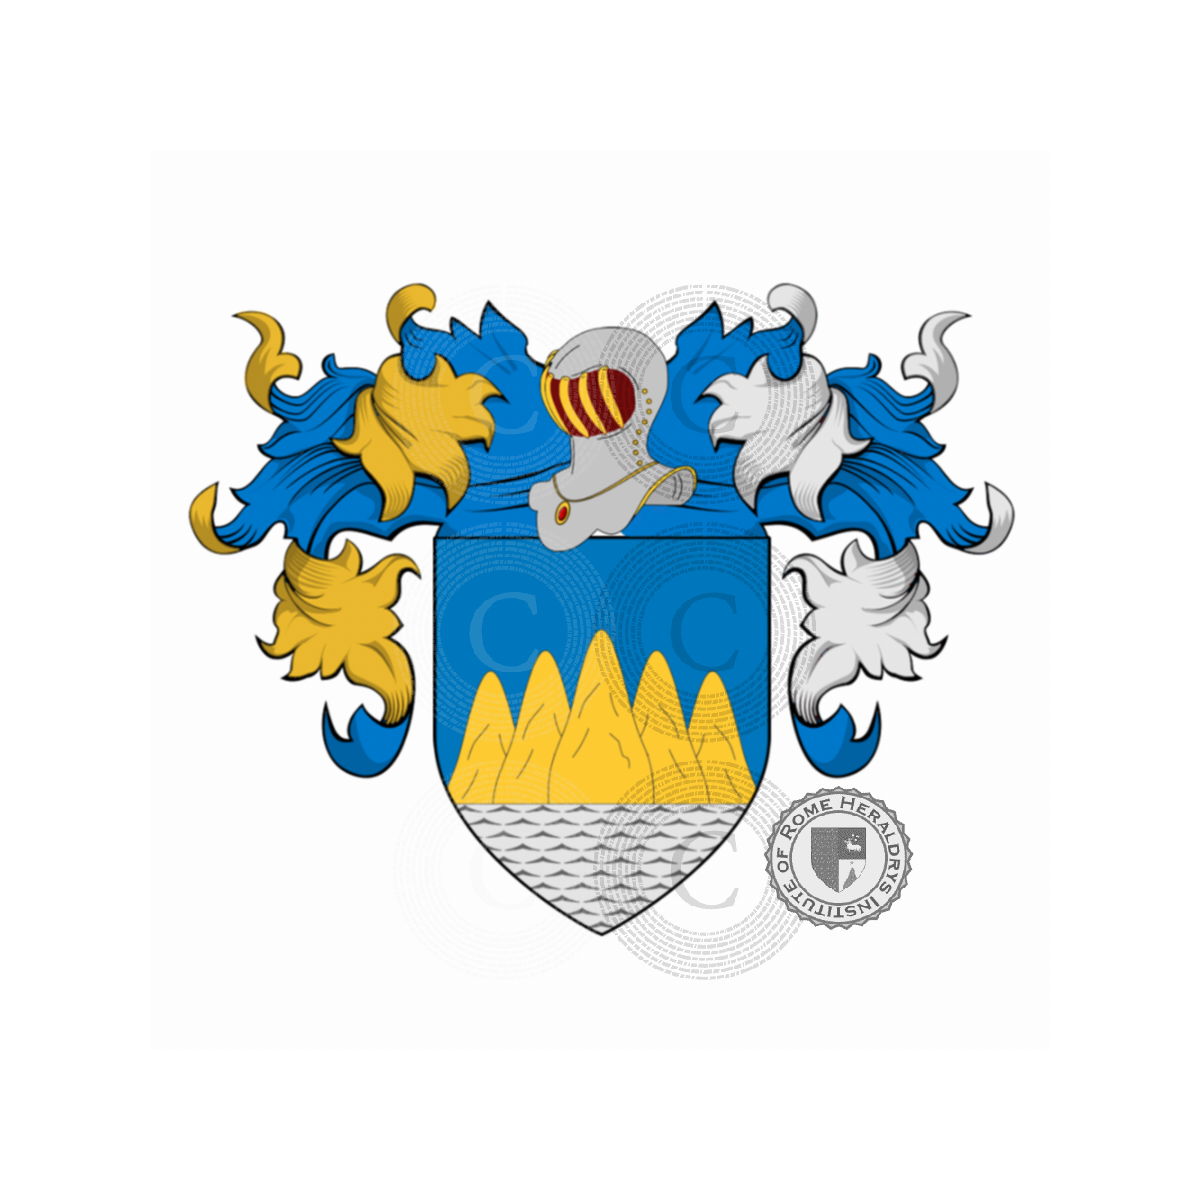 Wappen der FamilieMontalbano